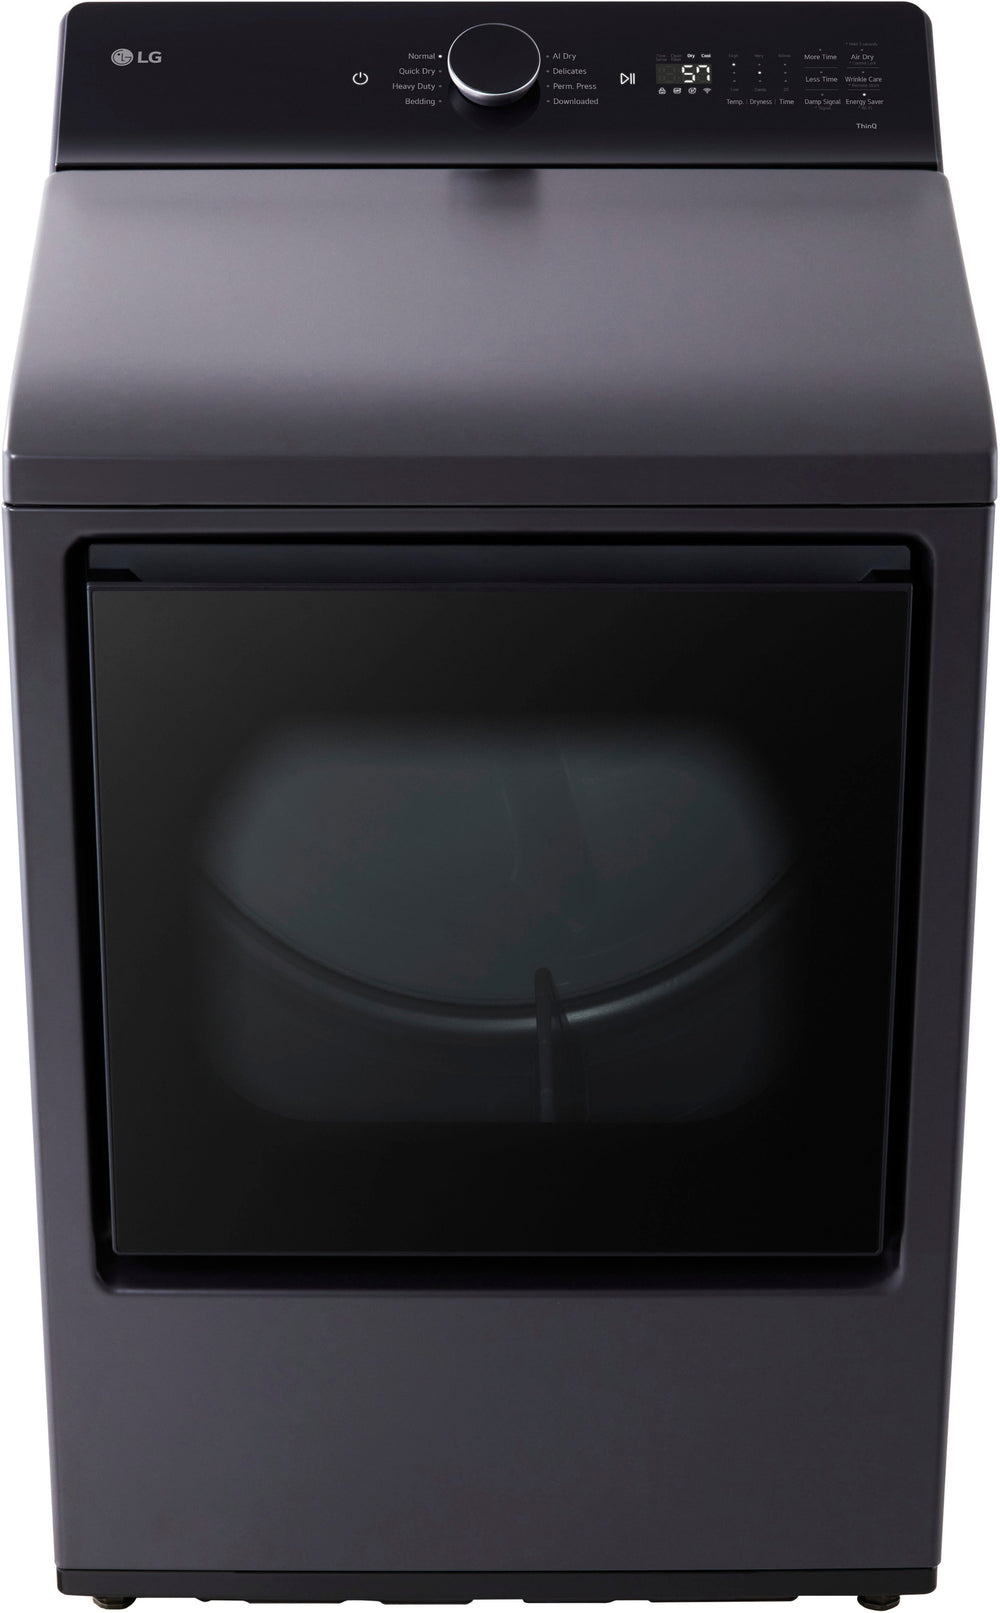 LG - 7.3 Cu. Ft. Smart Electric Dryer with EasyLoad Door - Matte Black_1